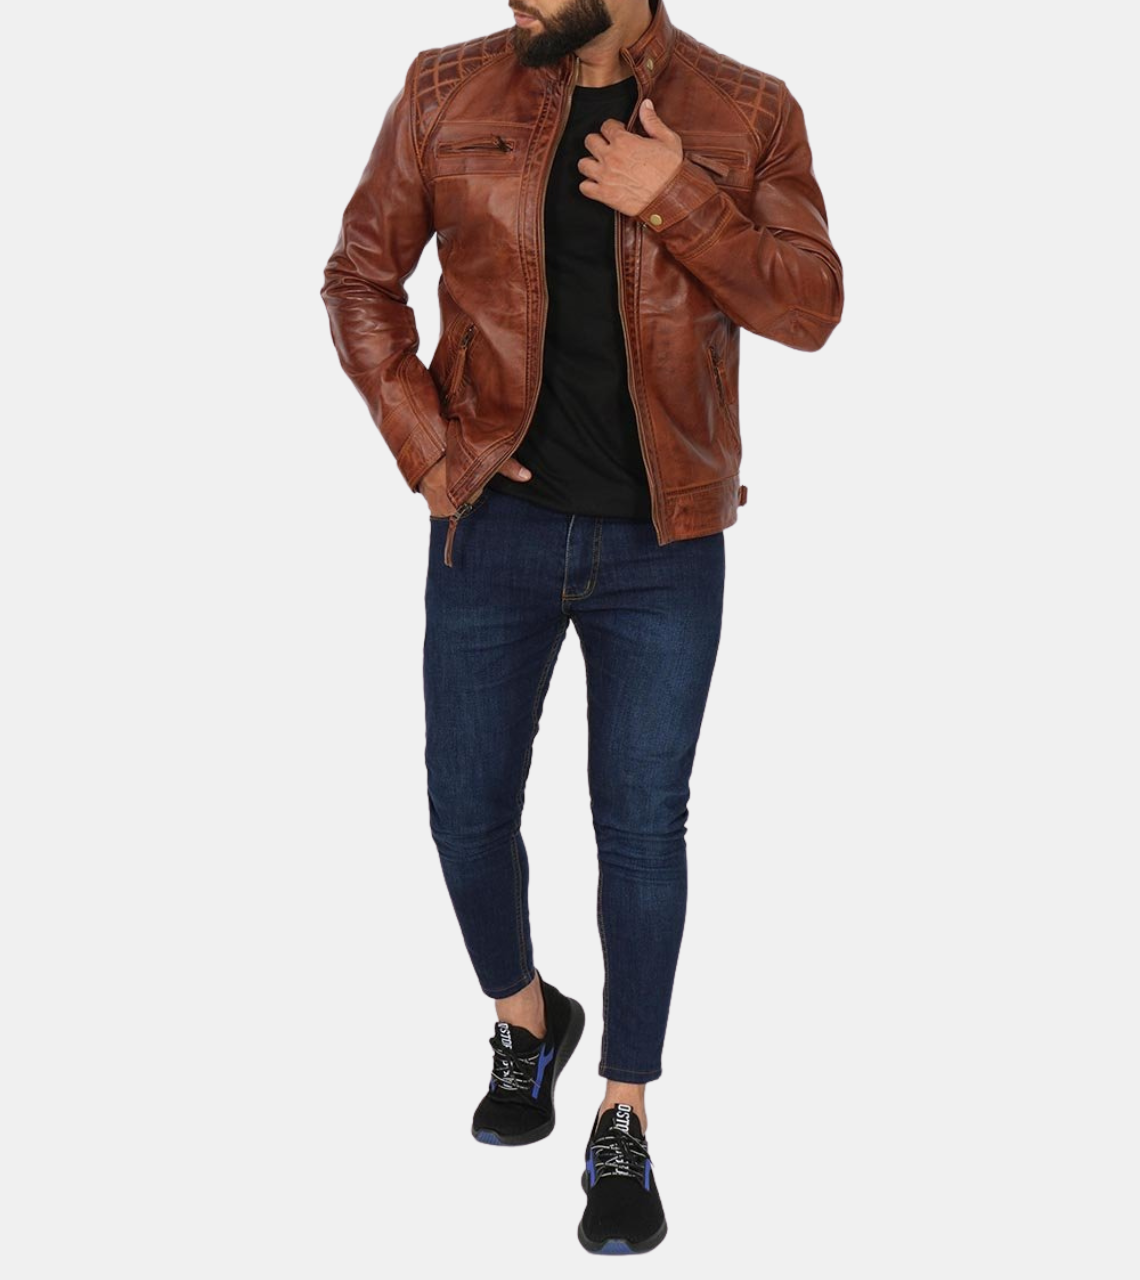  Men's Brown Distressed Leather Jacket